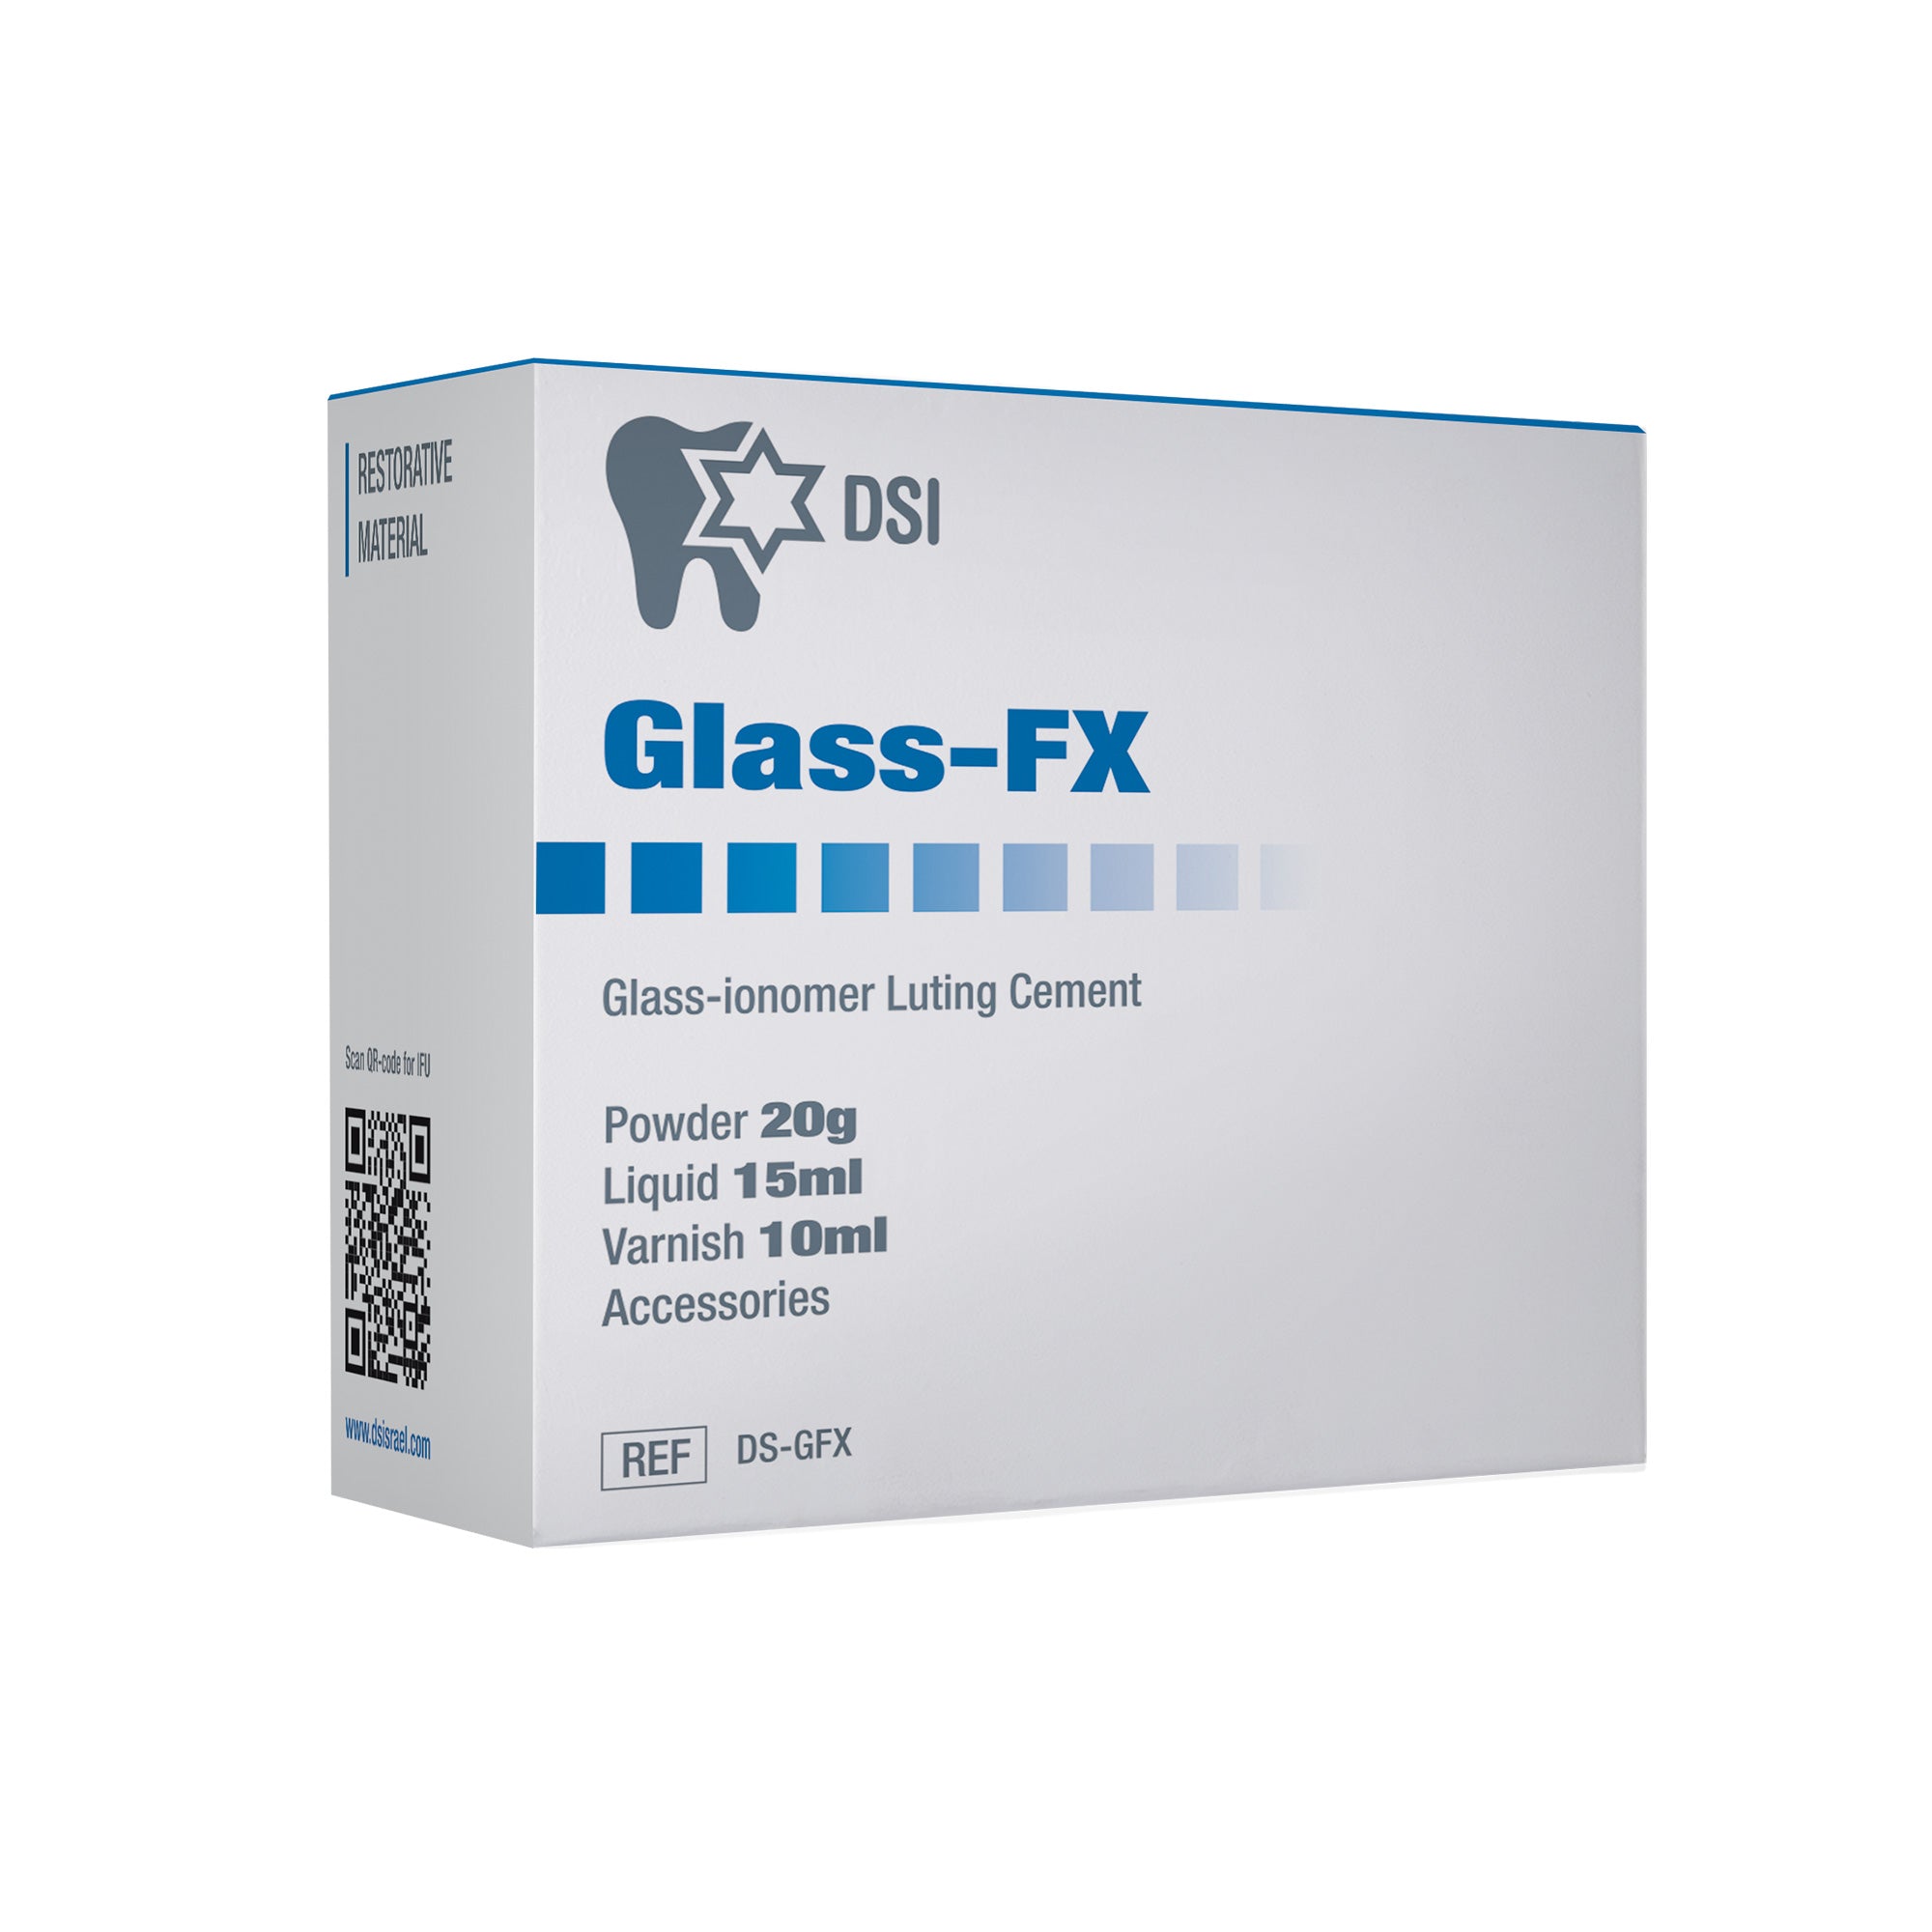 DSI Glass FX Glass-Ionomer Luting Cement 20g + 15ml + 10ml